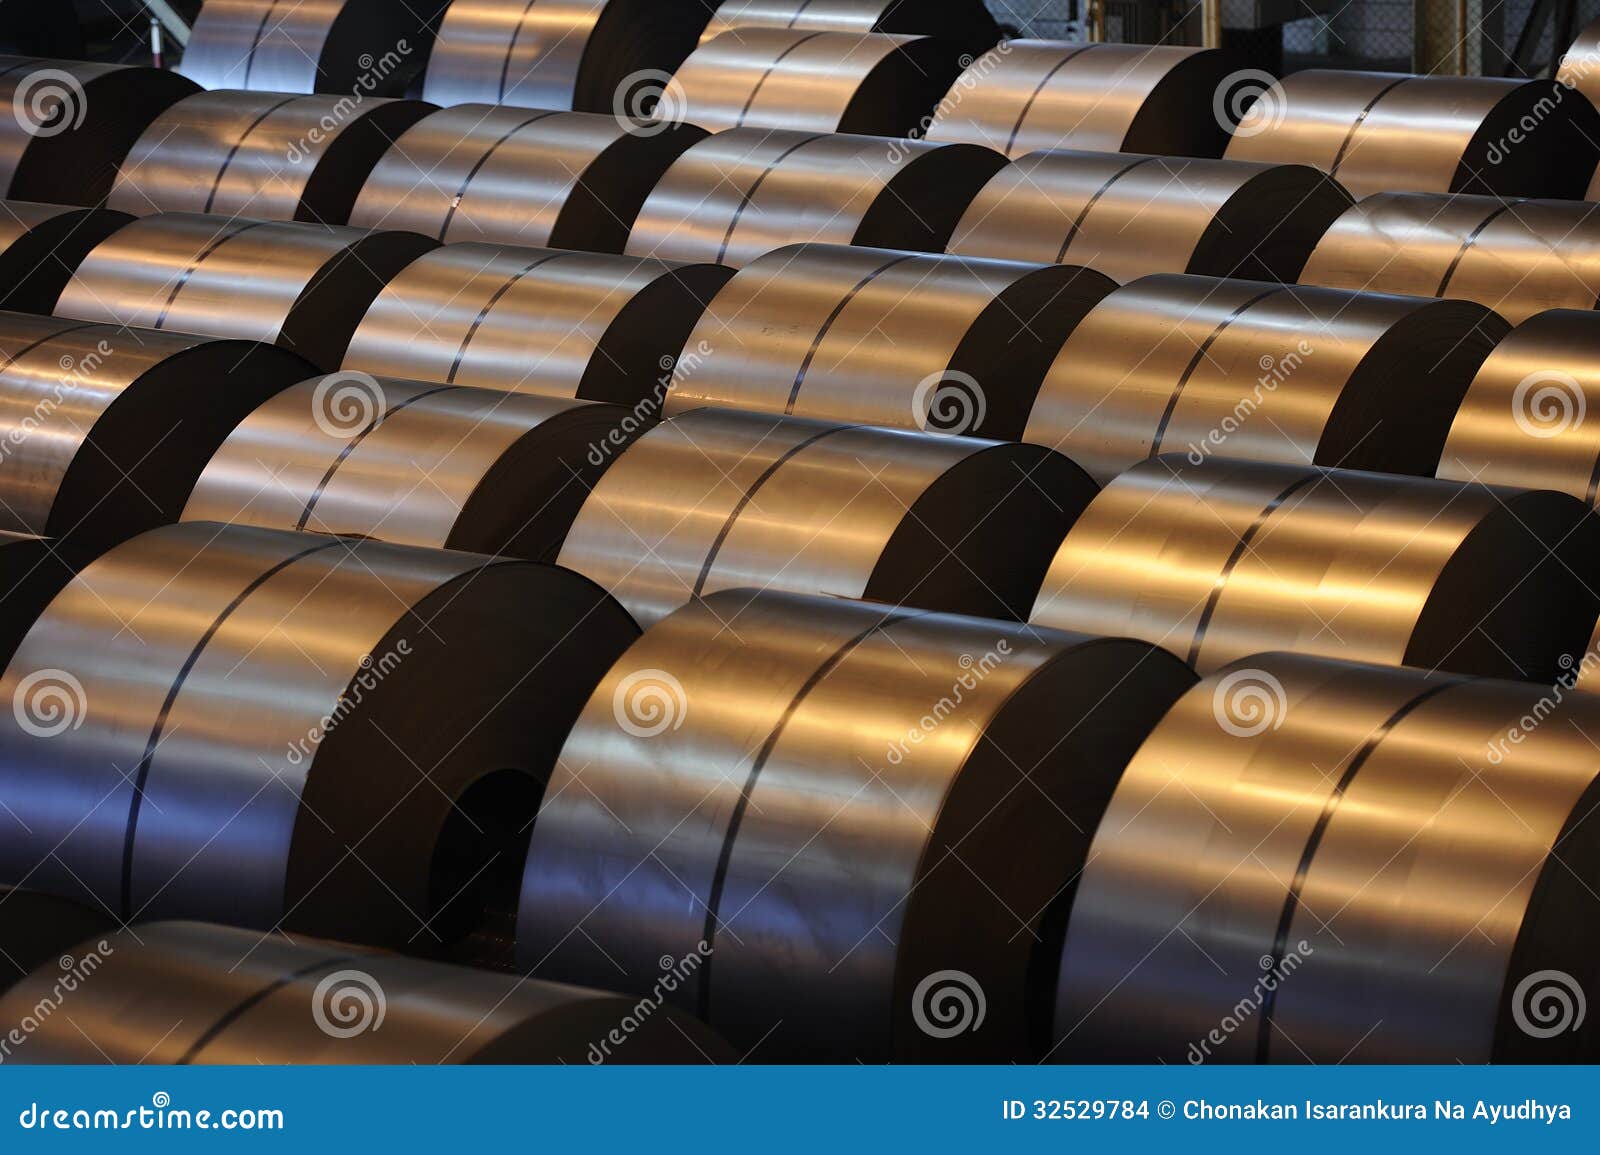 steel coils